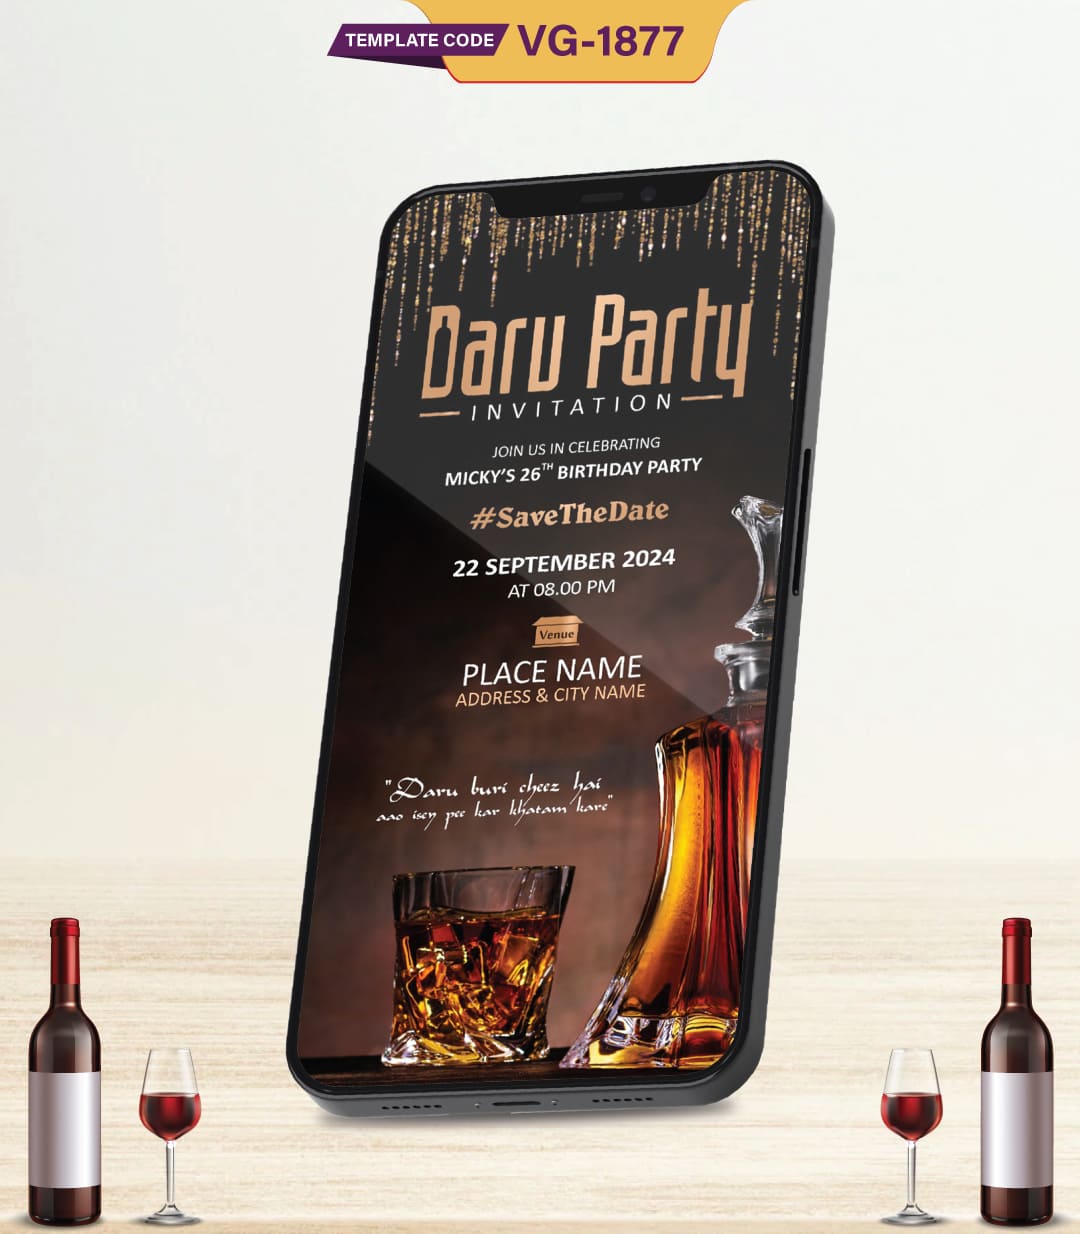 Daru Party Invitation Card